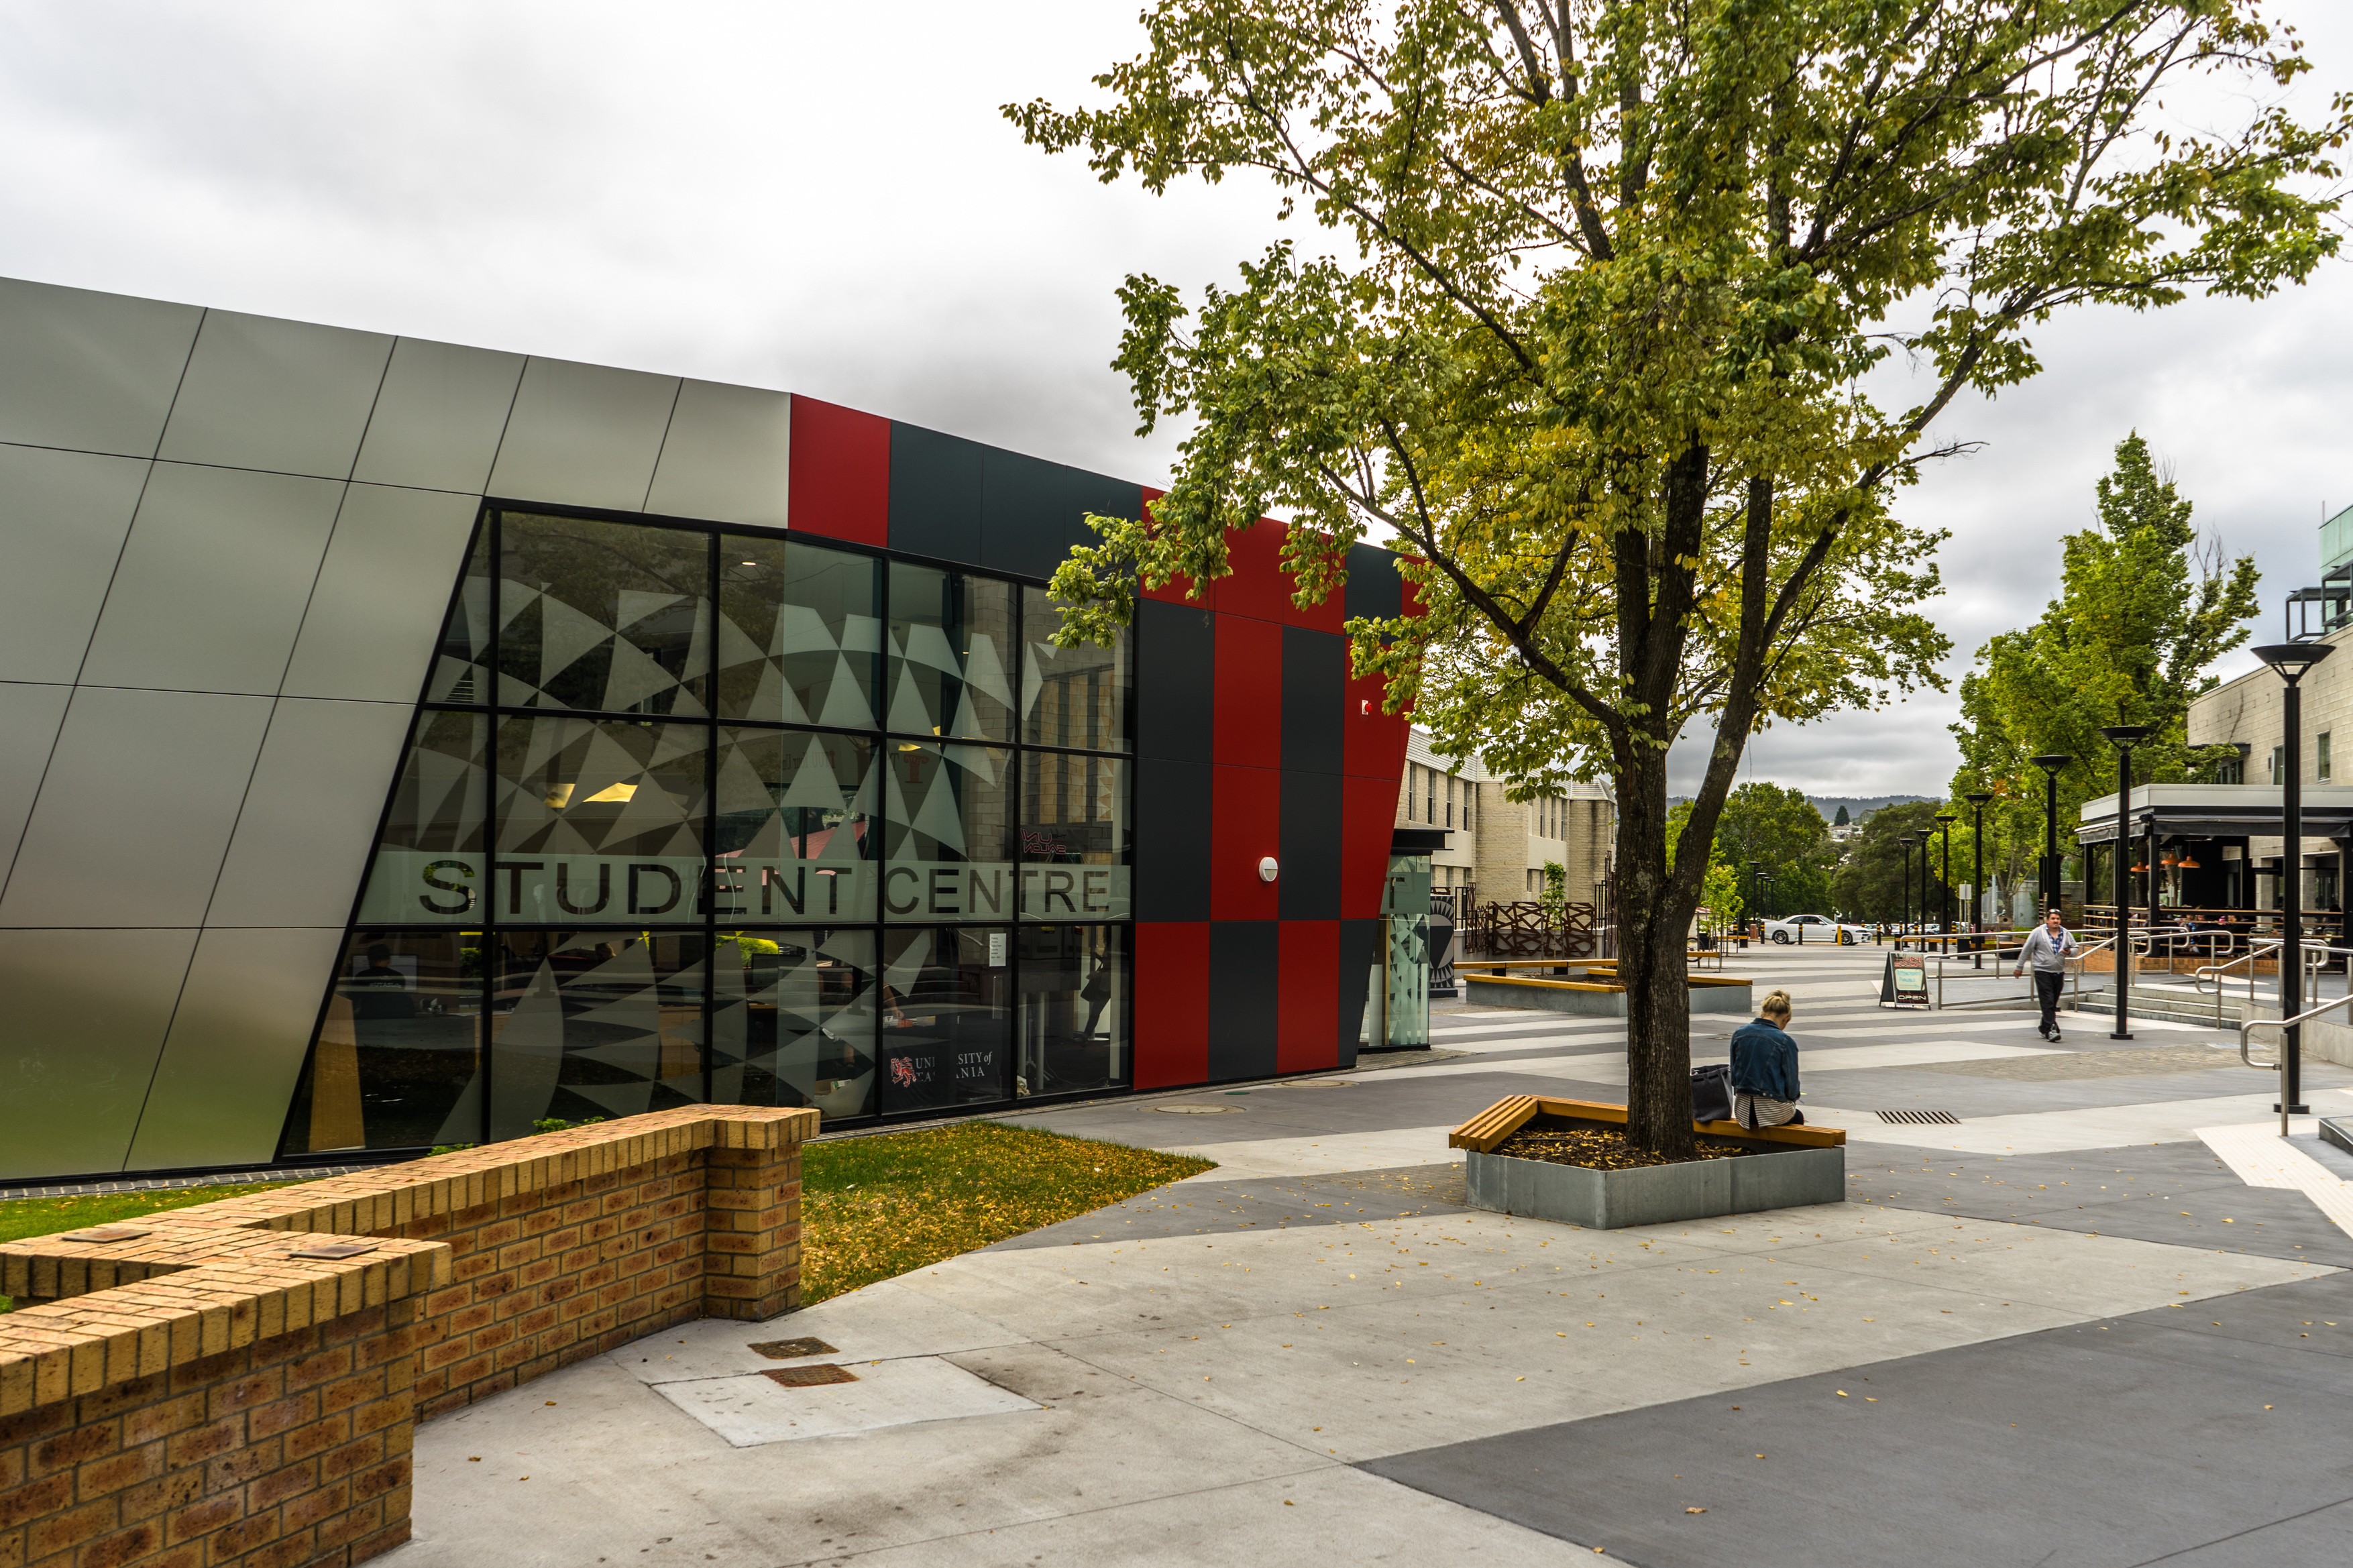  University of Tasmania Student Centre 2019 Tasmanian 